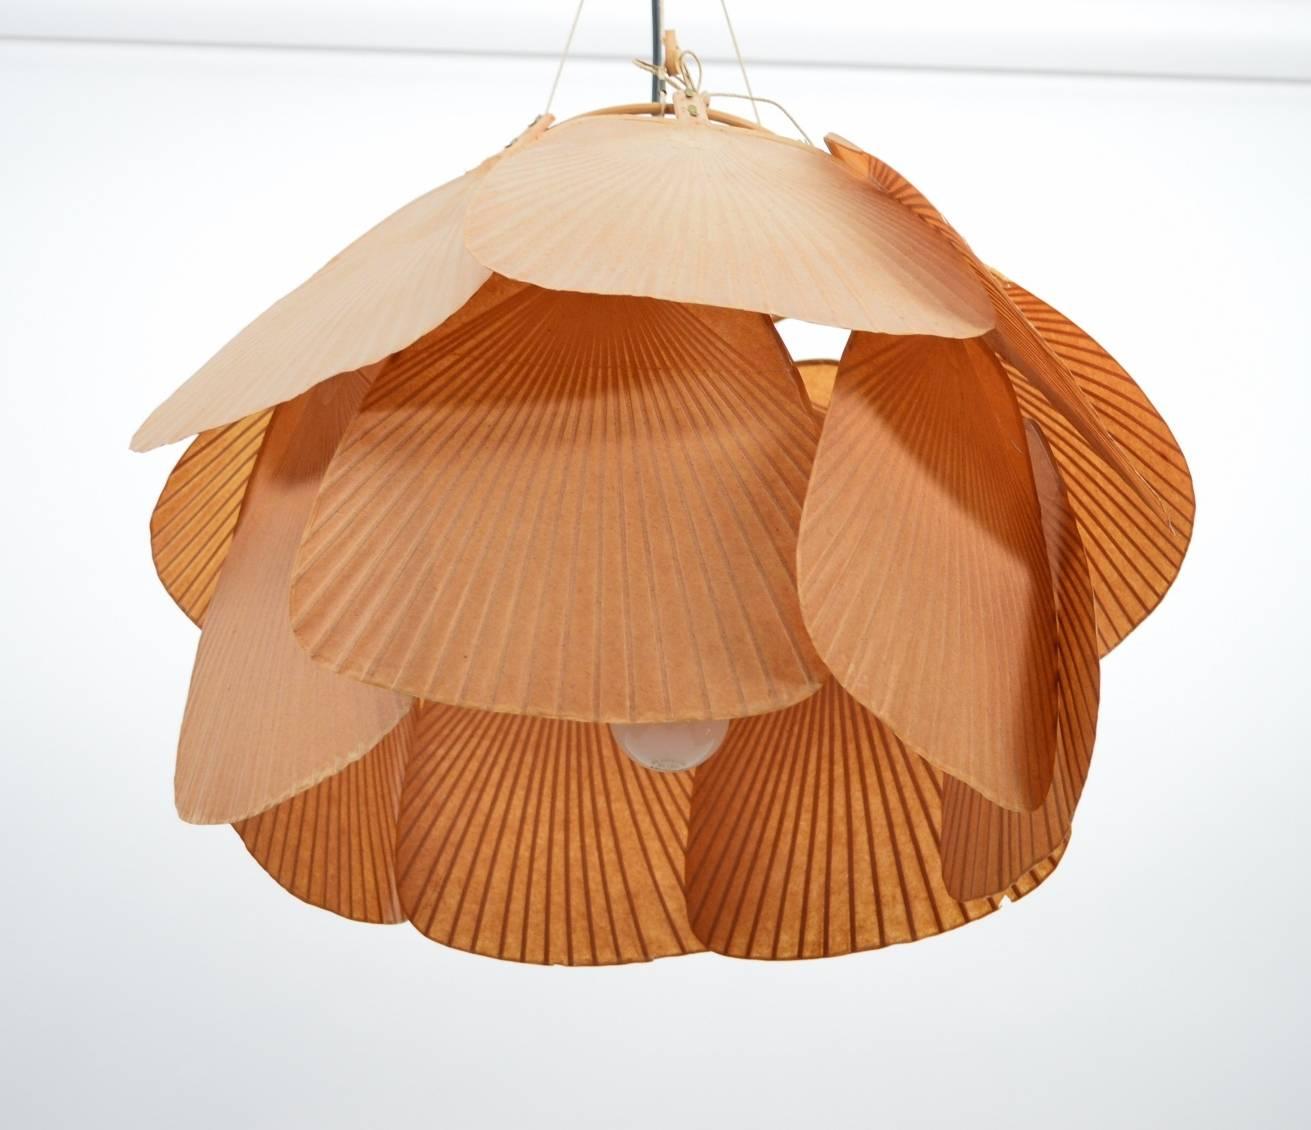 Italian Rare Ju-Yon Ceiling Lamp by Ingo Maurer, 1973